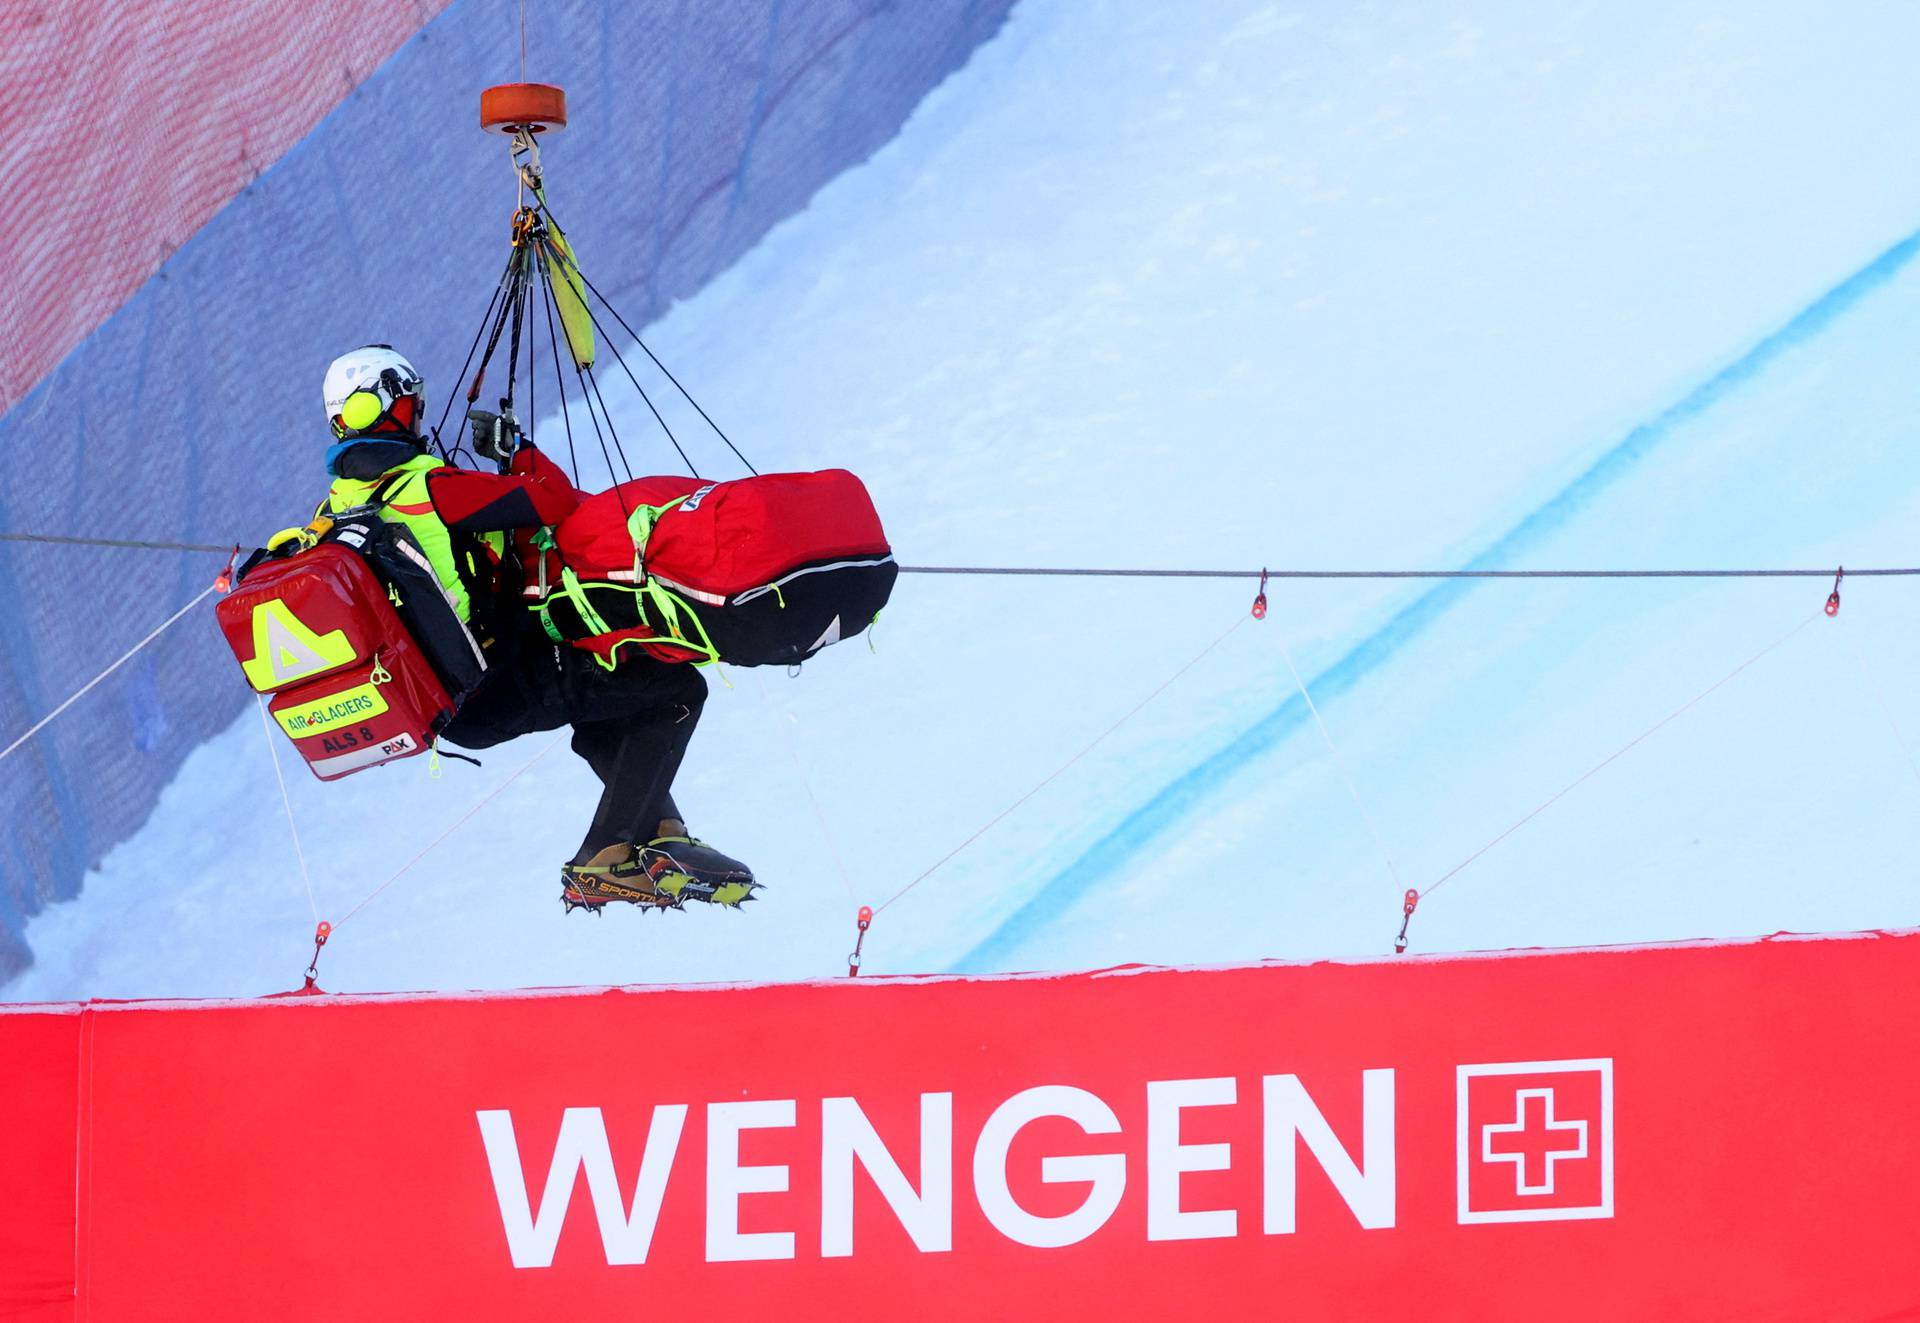 FIS Alpine Ski World Cup - Men's Downhill